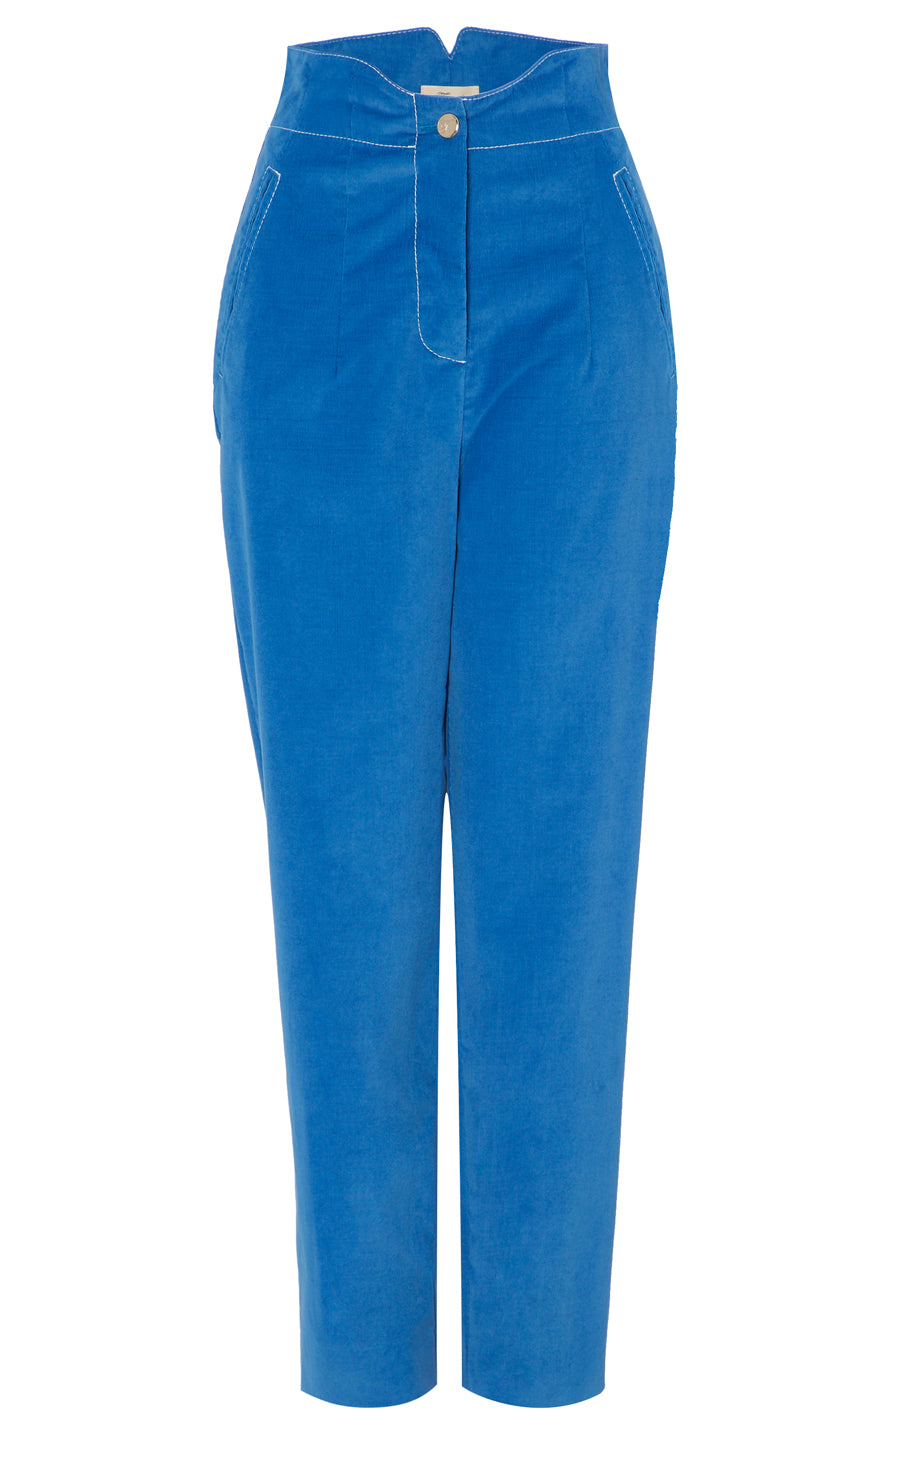 Orlando Corduroy Trousers - Dazzling Blue